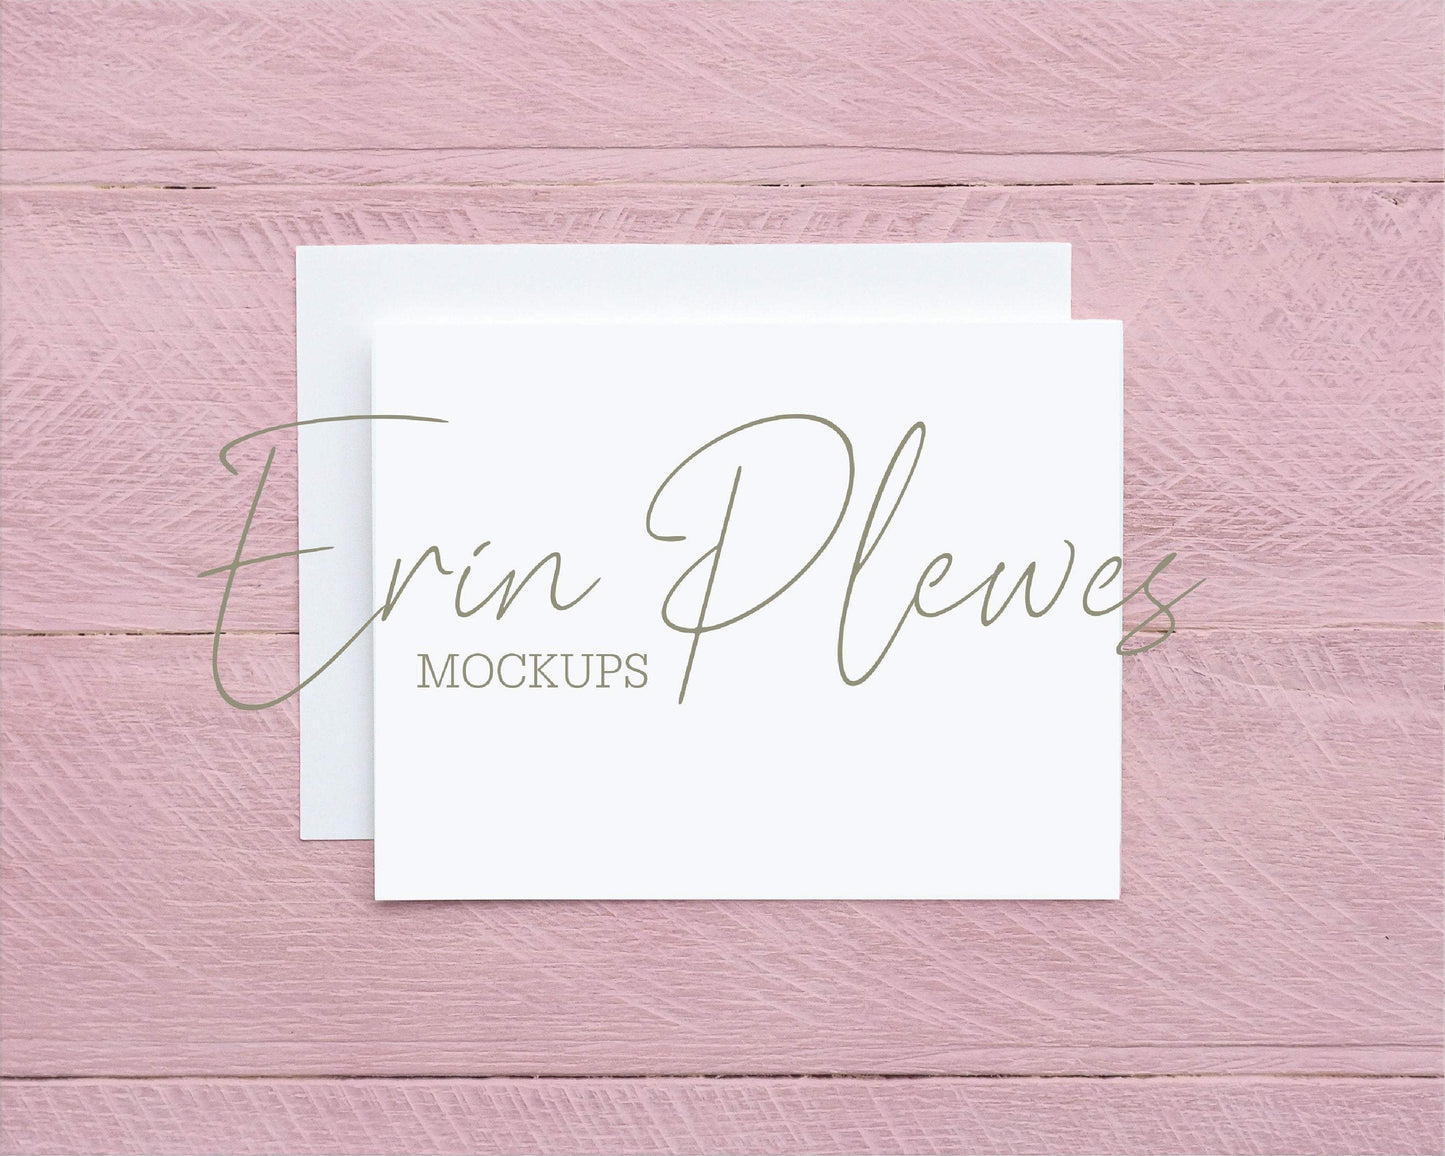 Erin Plewes Mockups A2 Card Mockup, Greeting Card Mock Up with White Envelope on Pink Background, Feminine Invitation Flat Lay, Jpeg Instant Digital Download